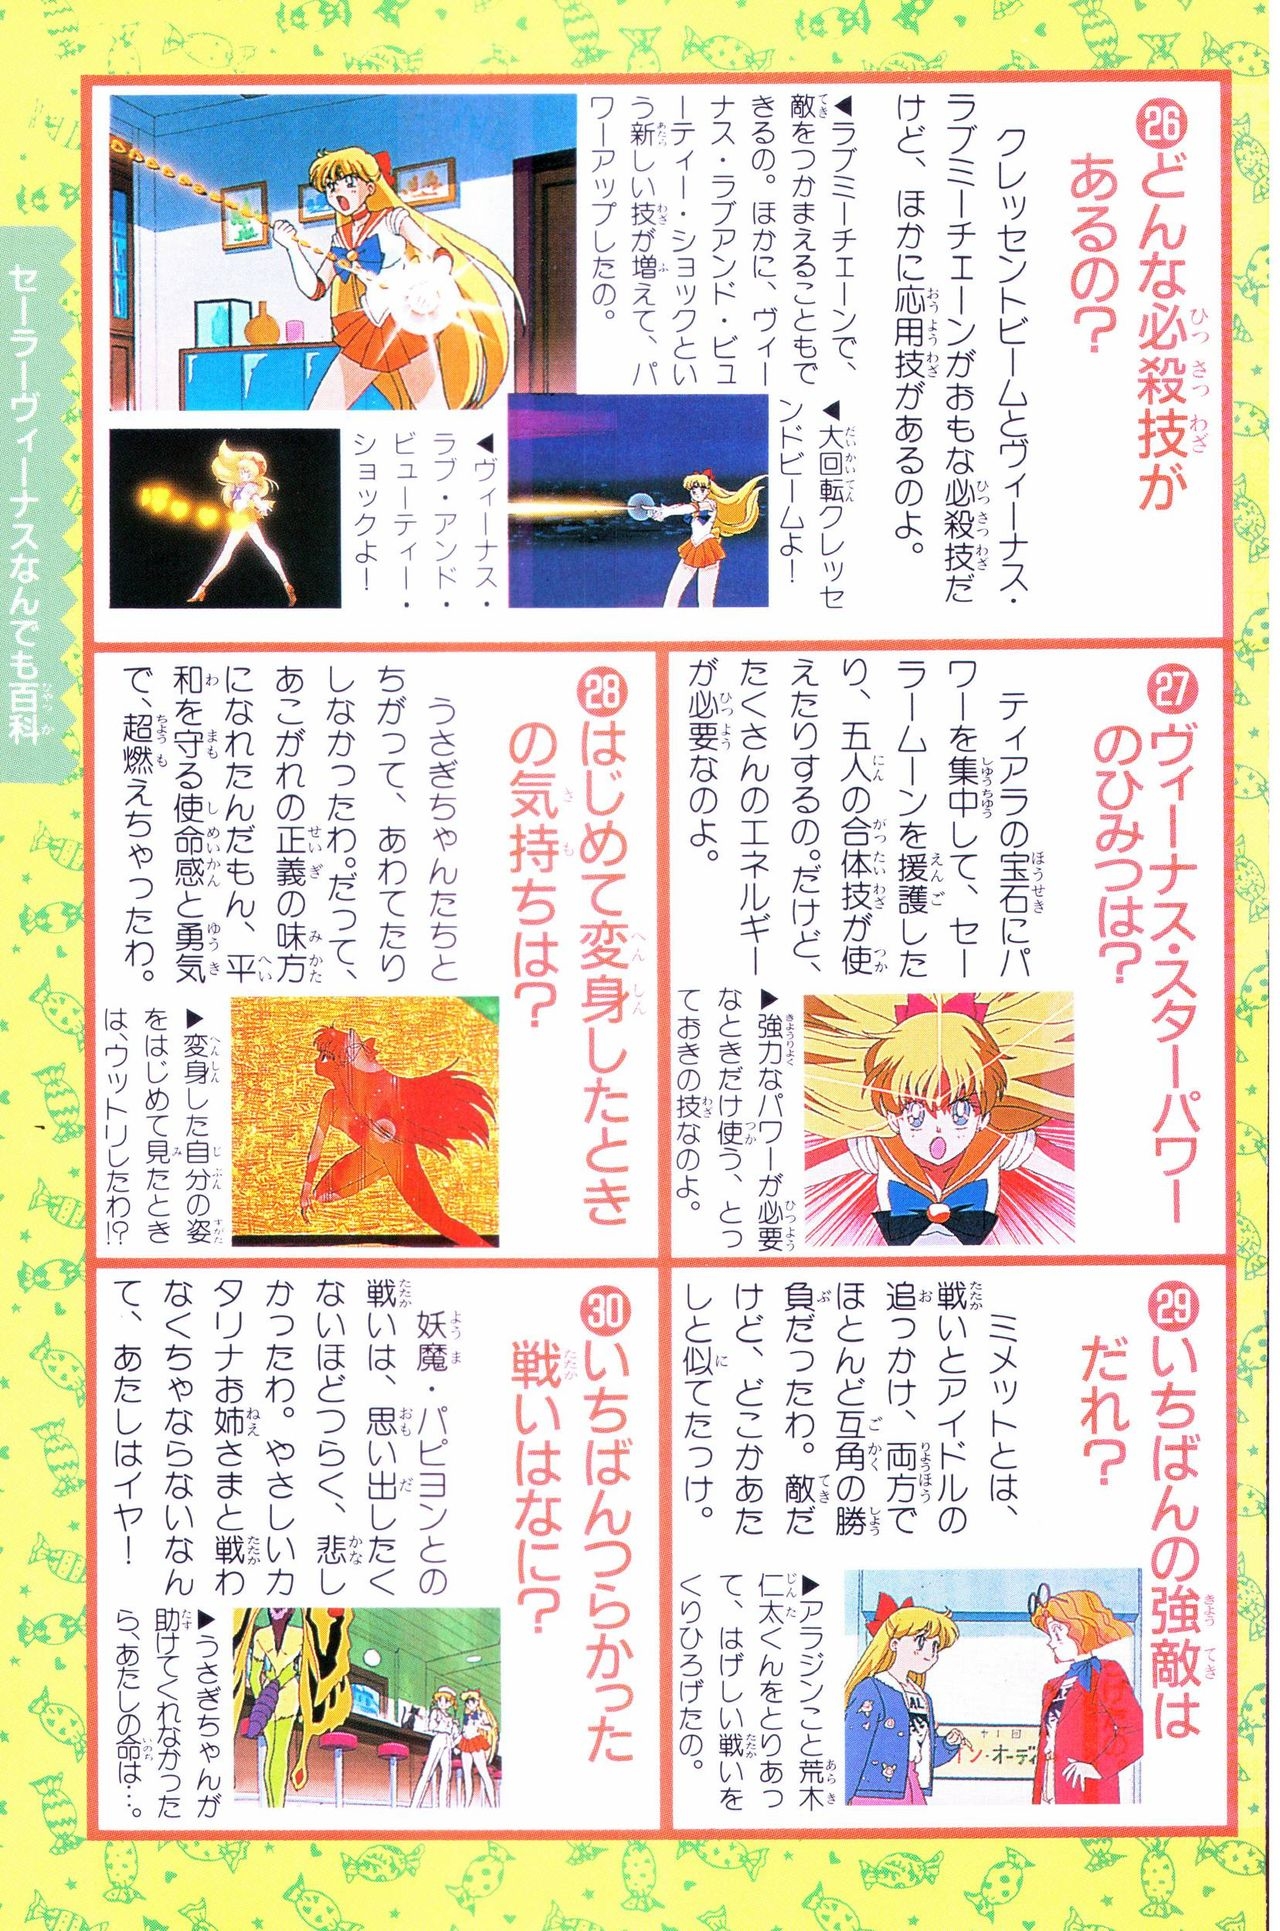 Sailor Moon Official Fan Book - Sailor Venus 33